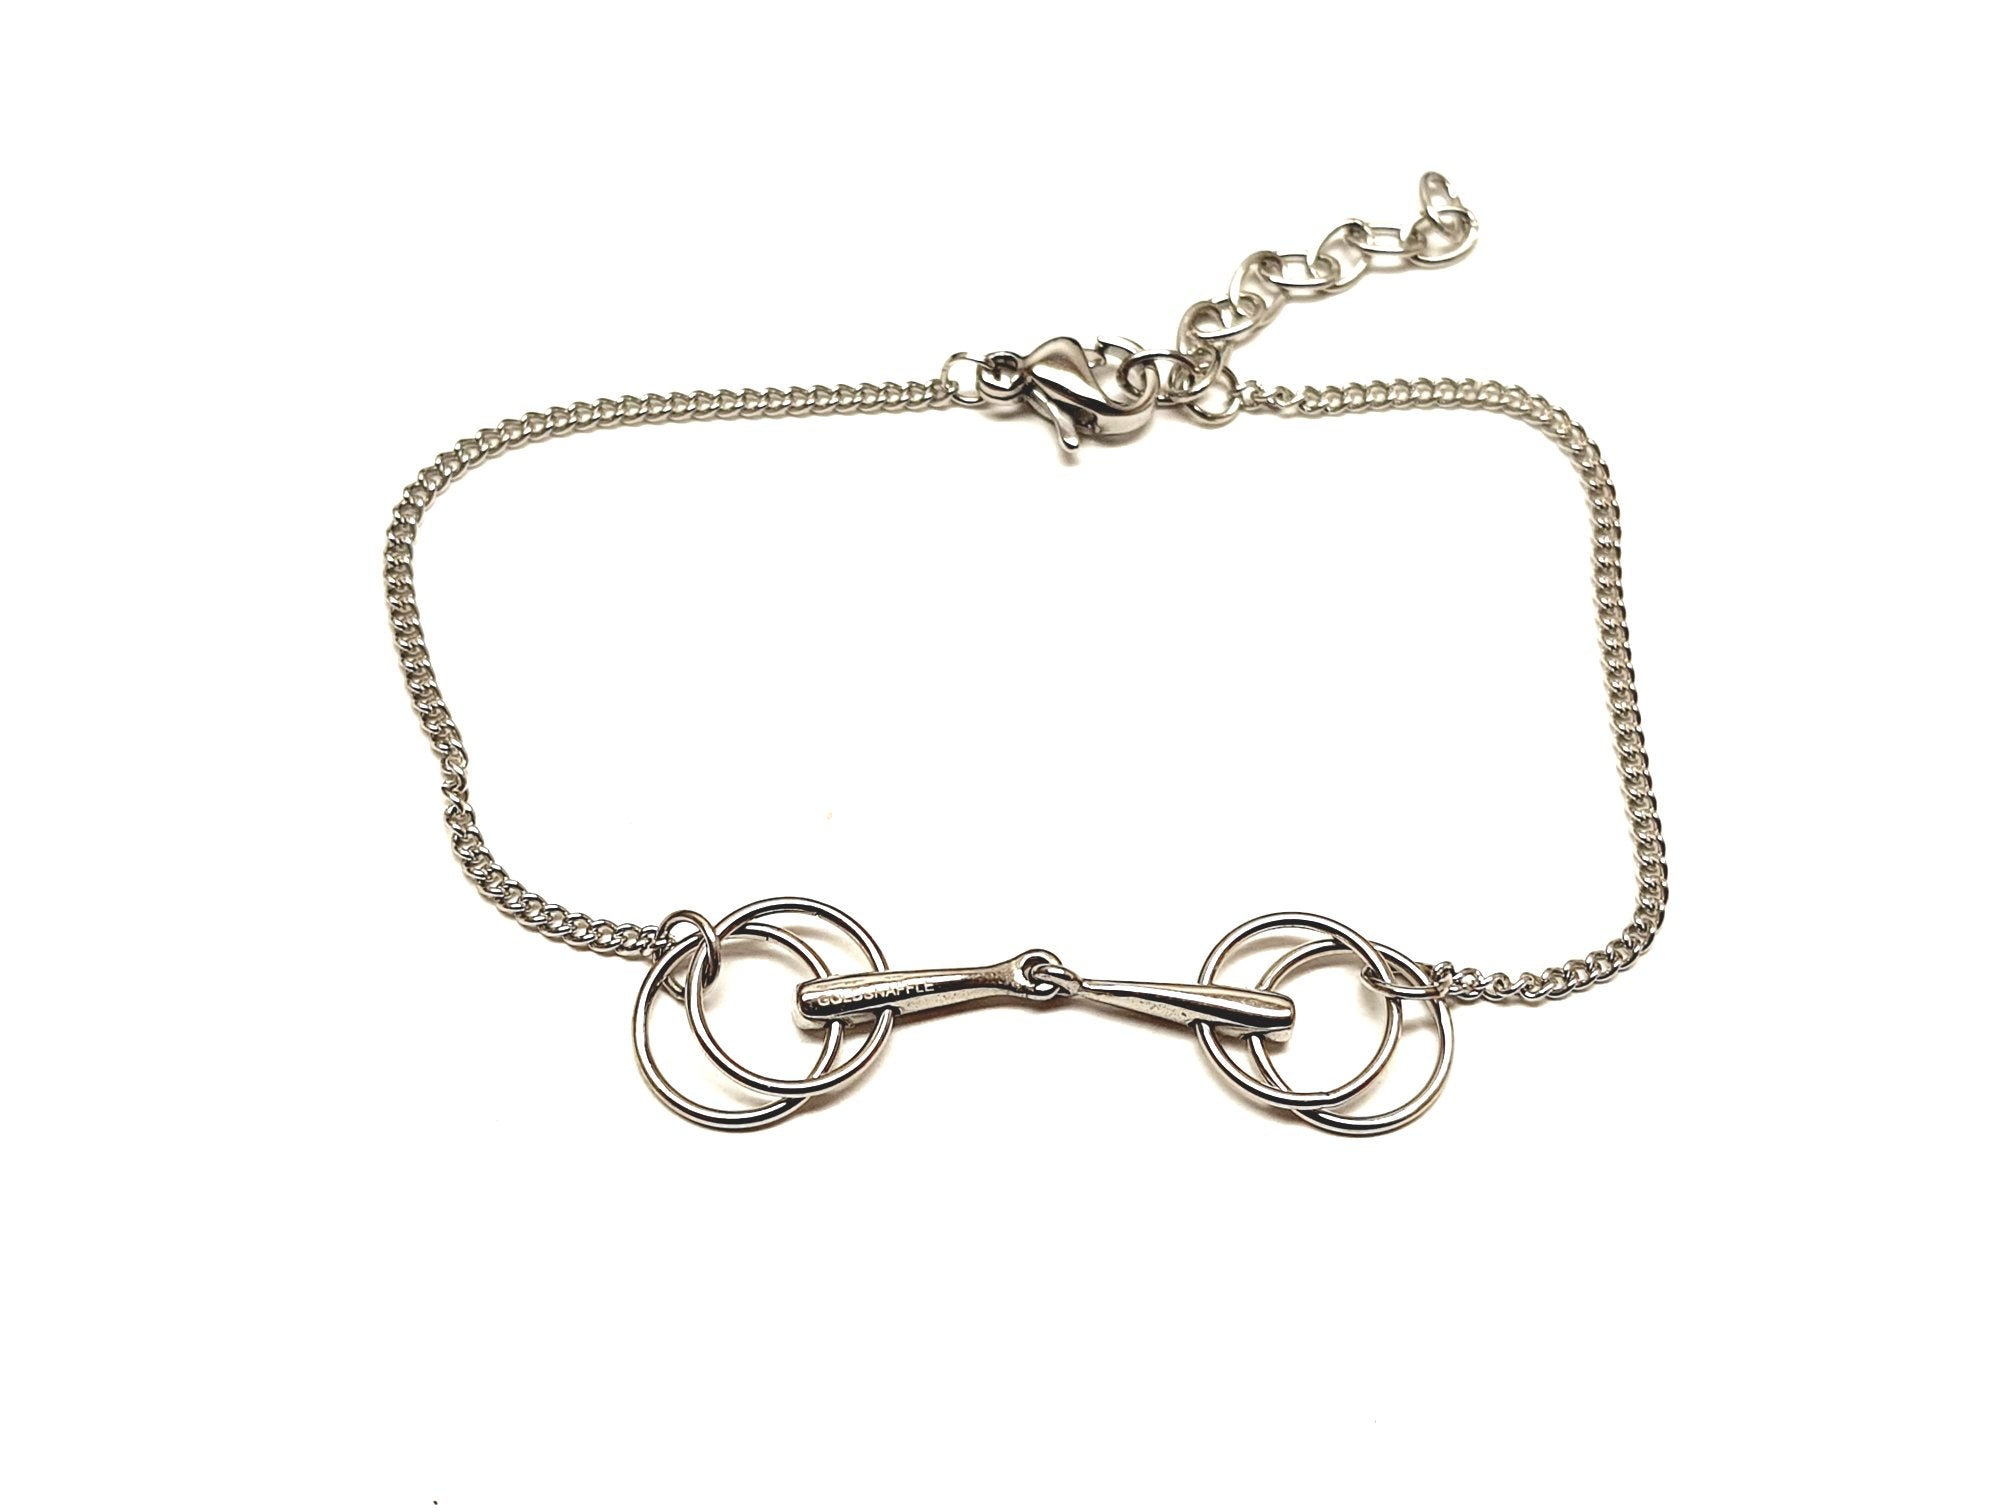 Double ring Horse bit necklace or bracelet